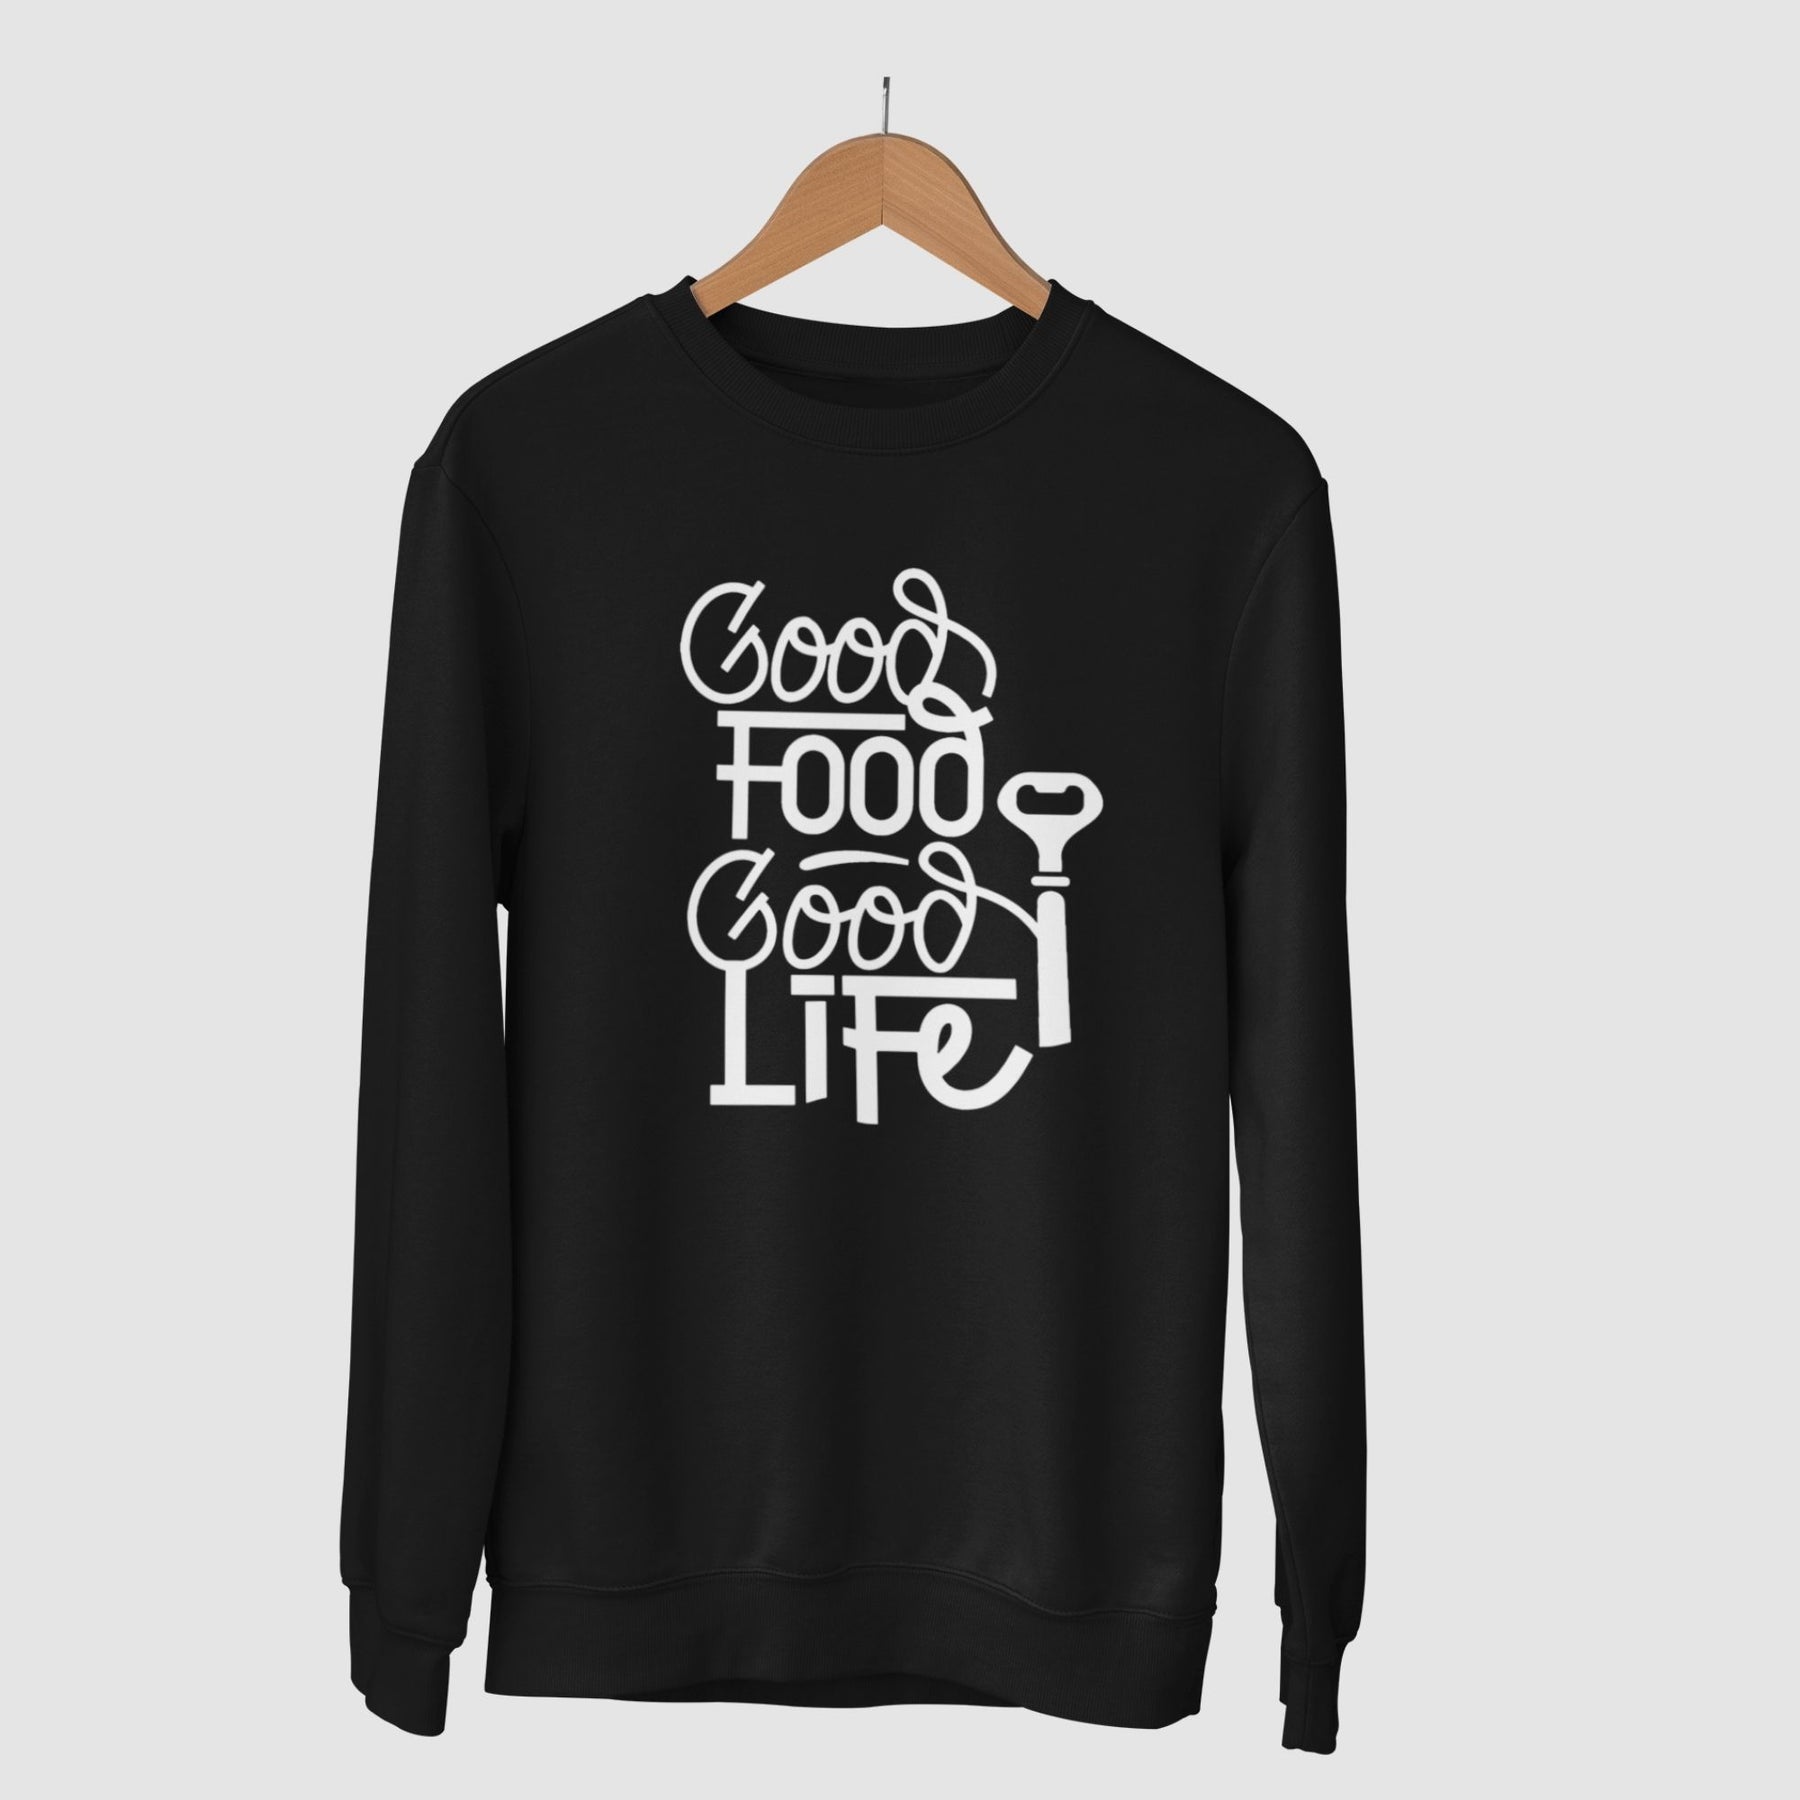 good-food-good-life-cotton-printed-unisex-black-sweatshirt-gogirgit-com